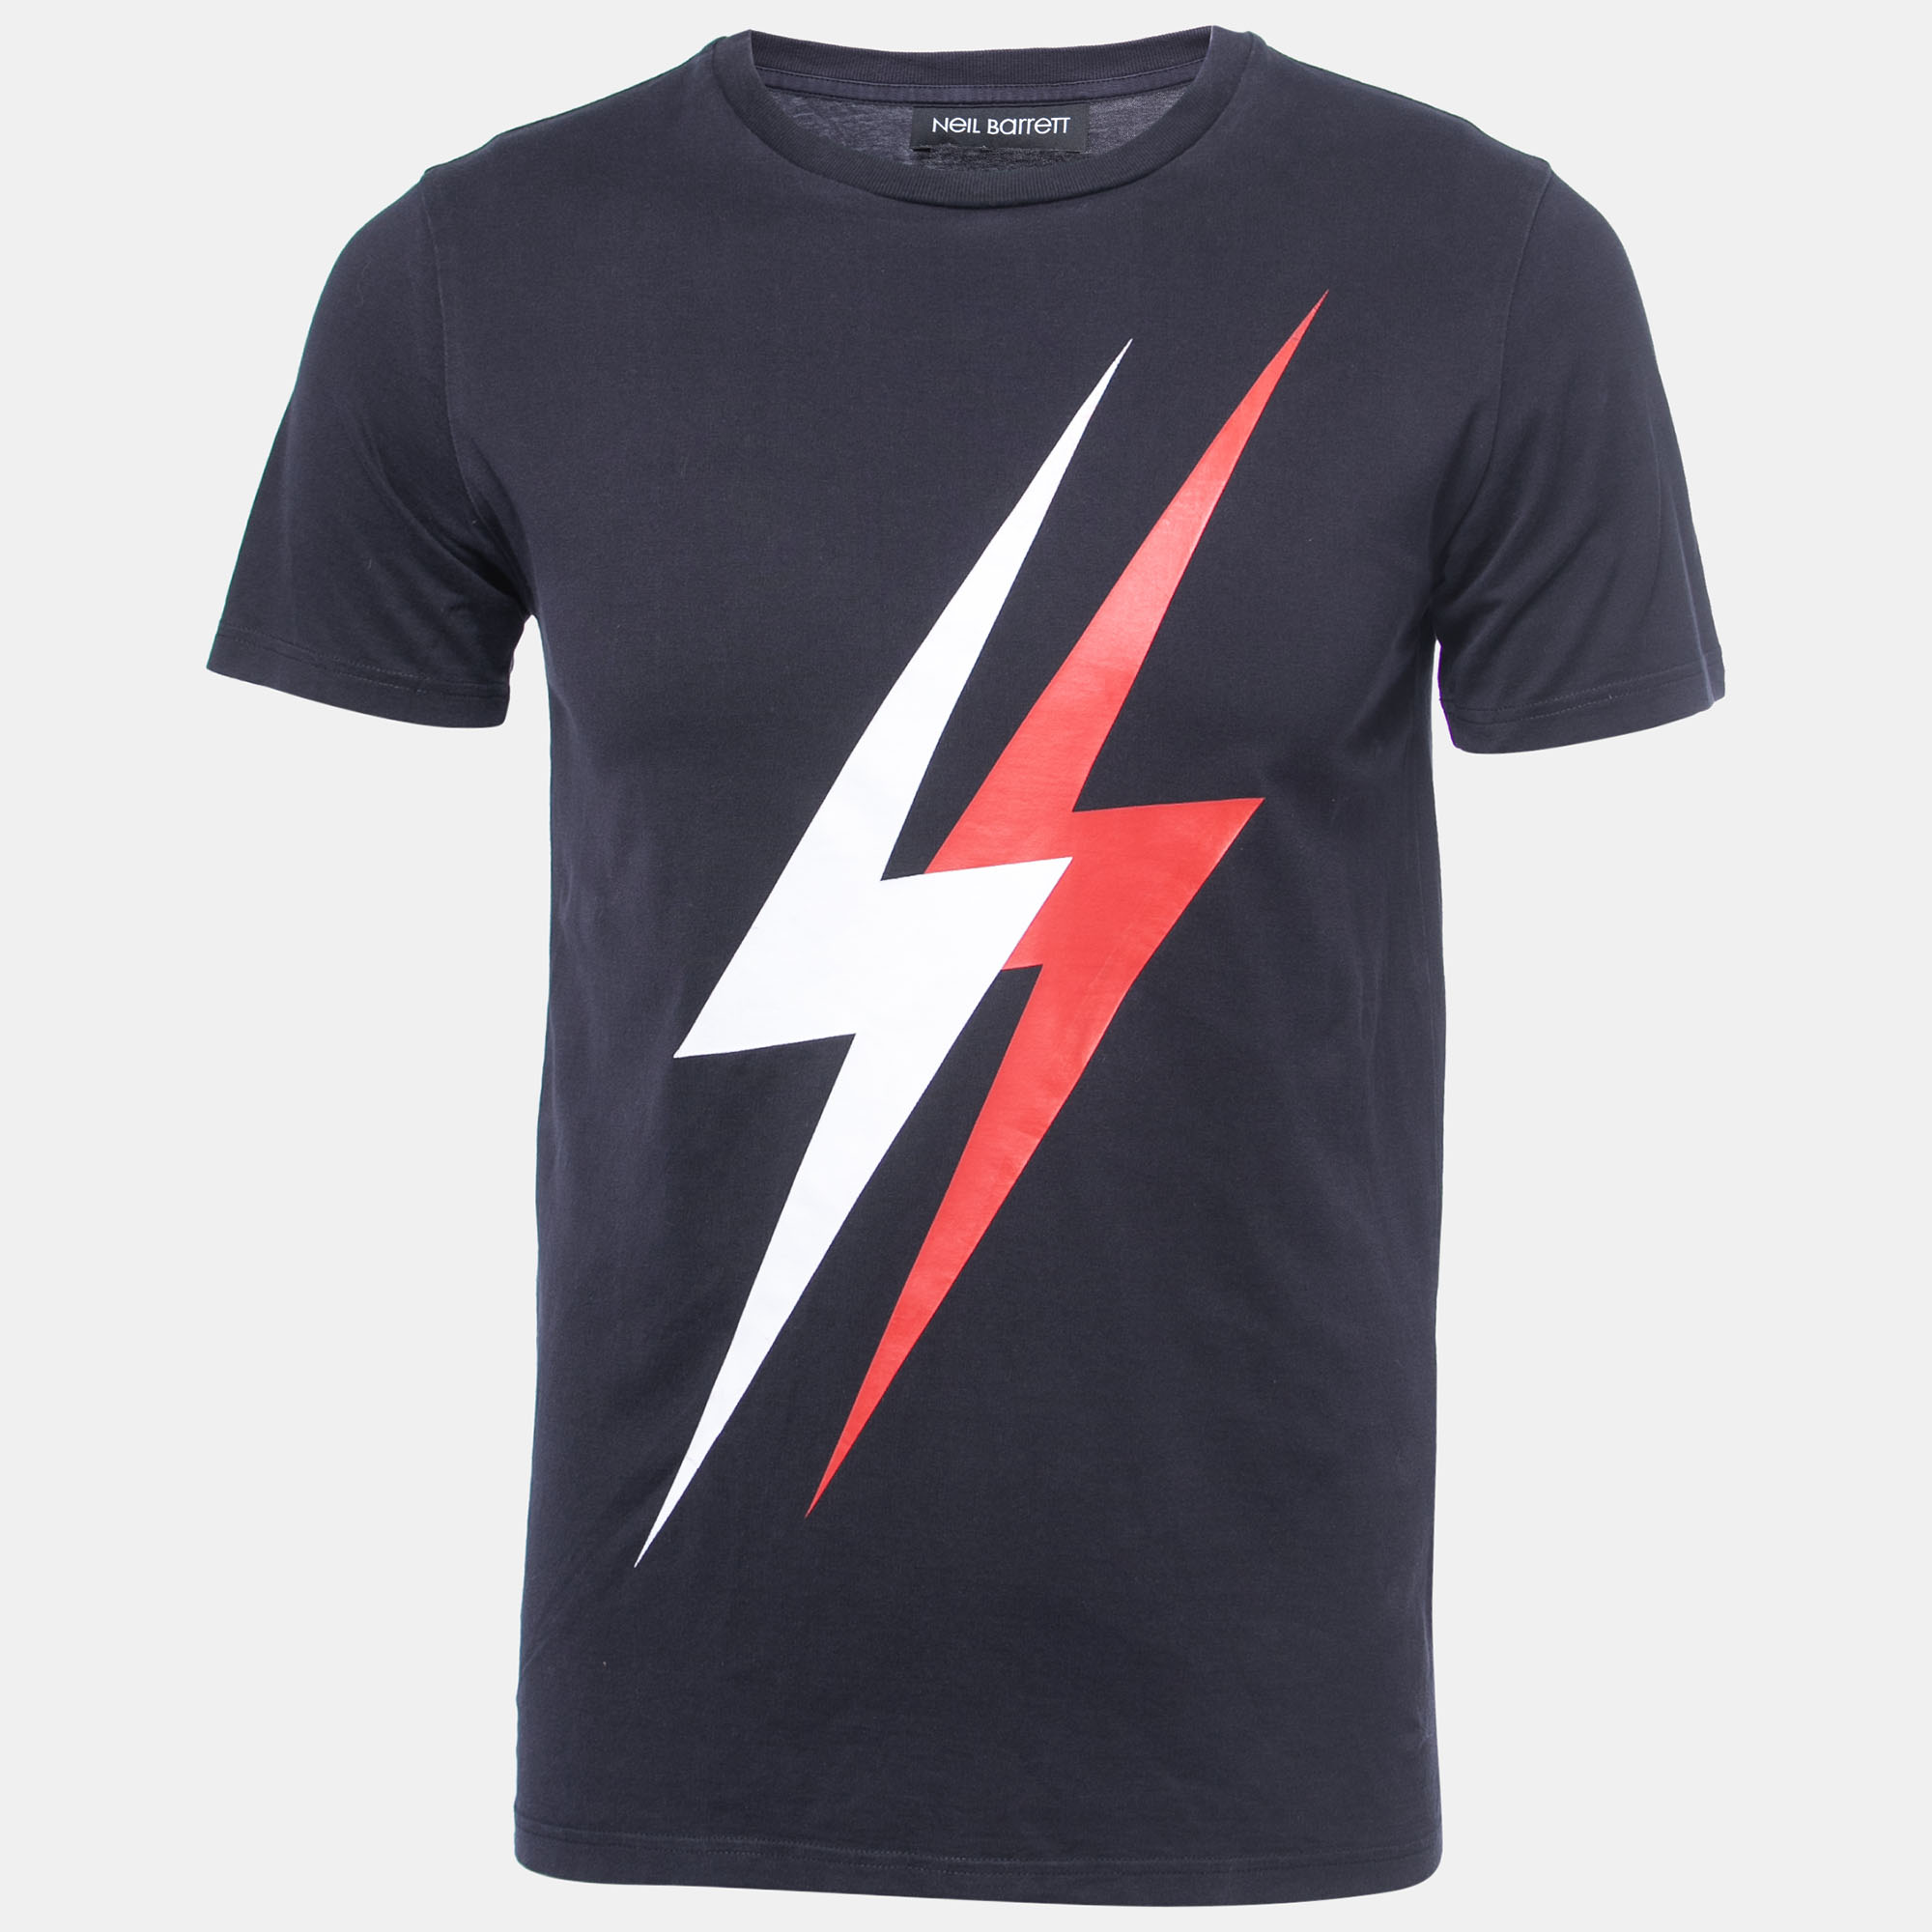 Neil Barrett Navy Blue Lightning Bolt Print Cotton Slim Fit T-Shirt S